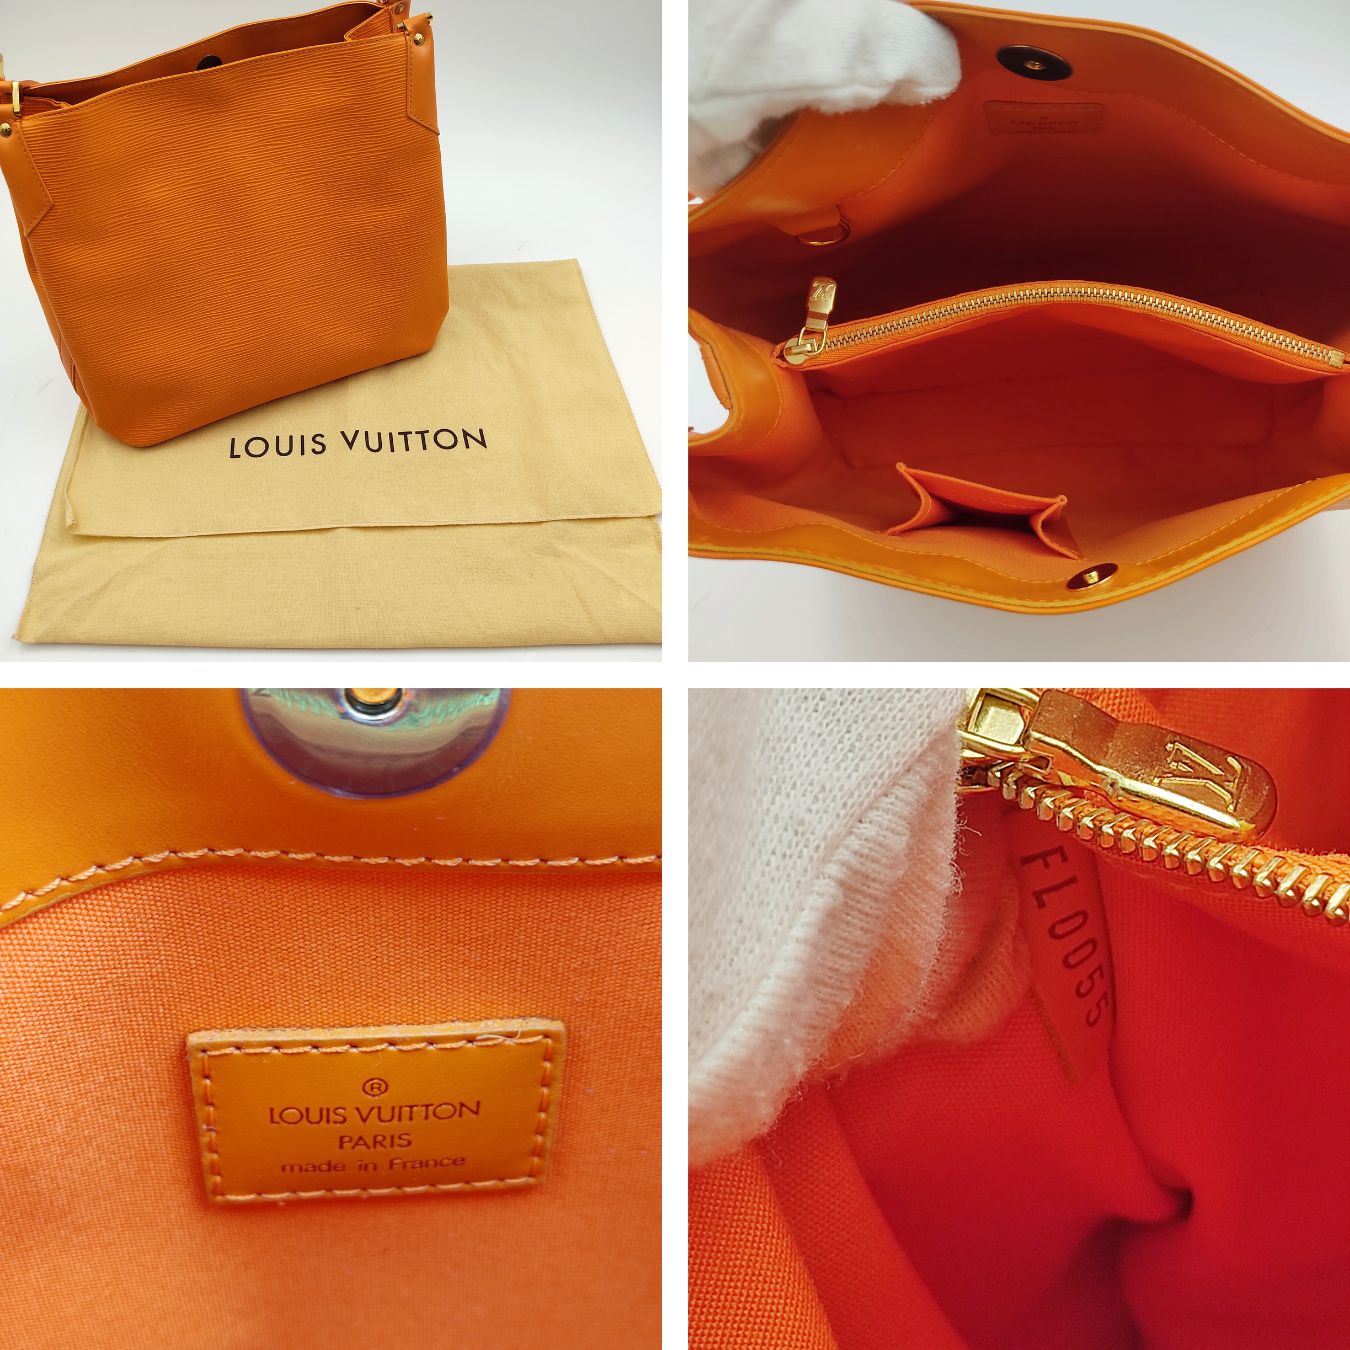 Louis Vuitton Louis Vuitton Mandara PM bag in orange epi leather